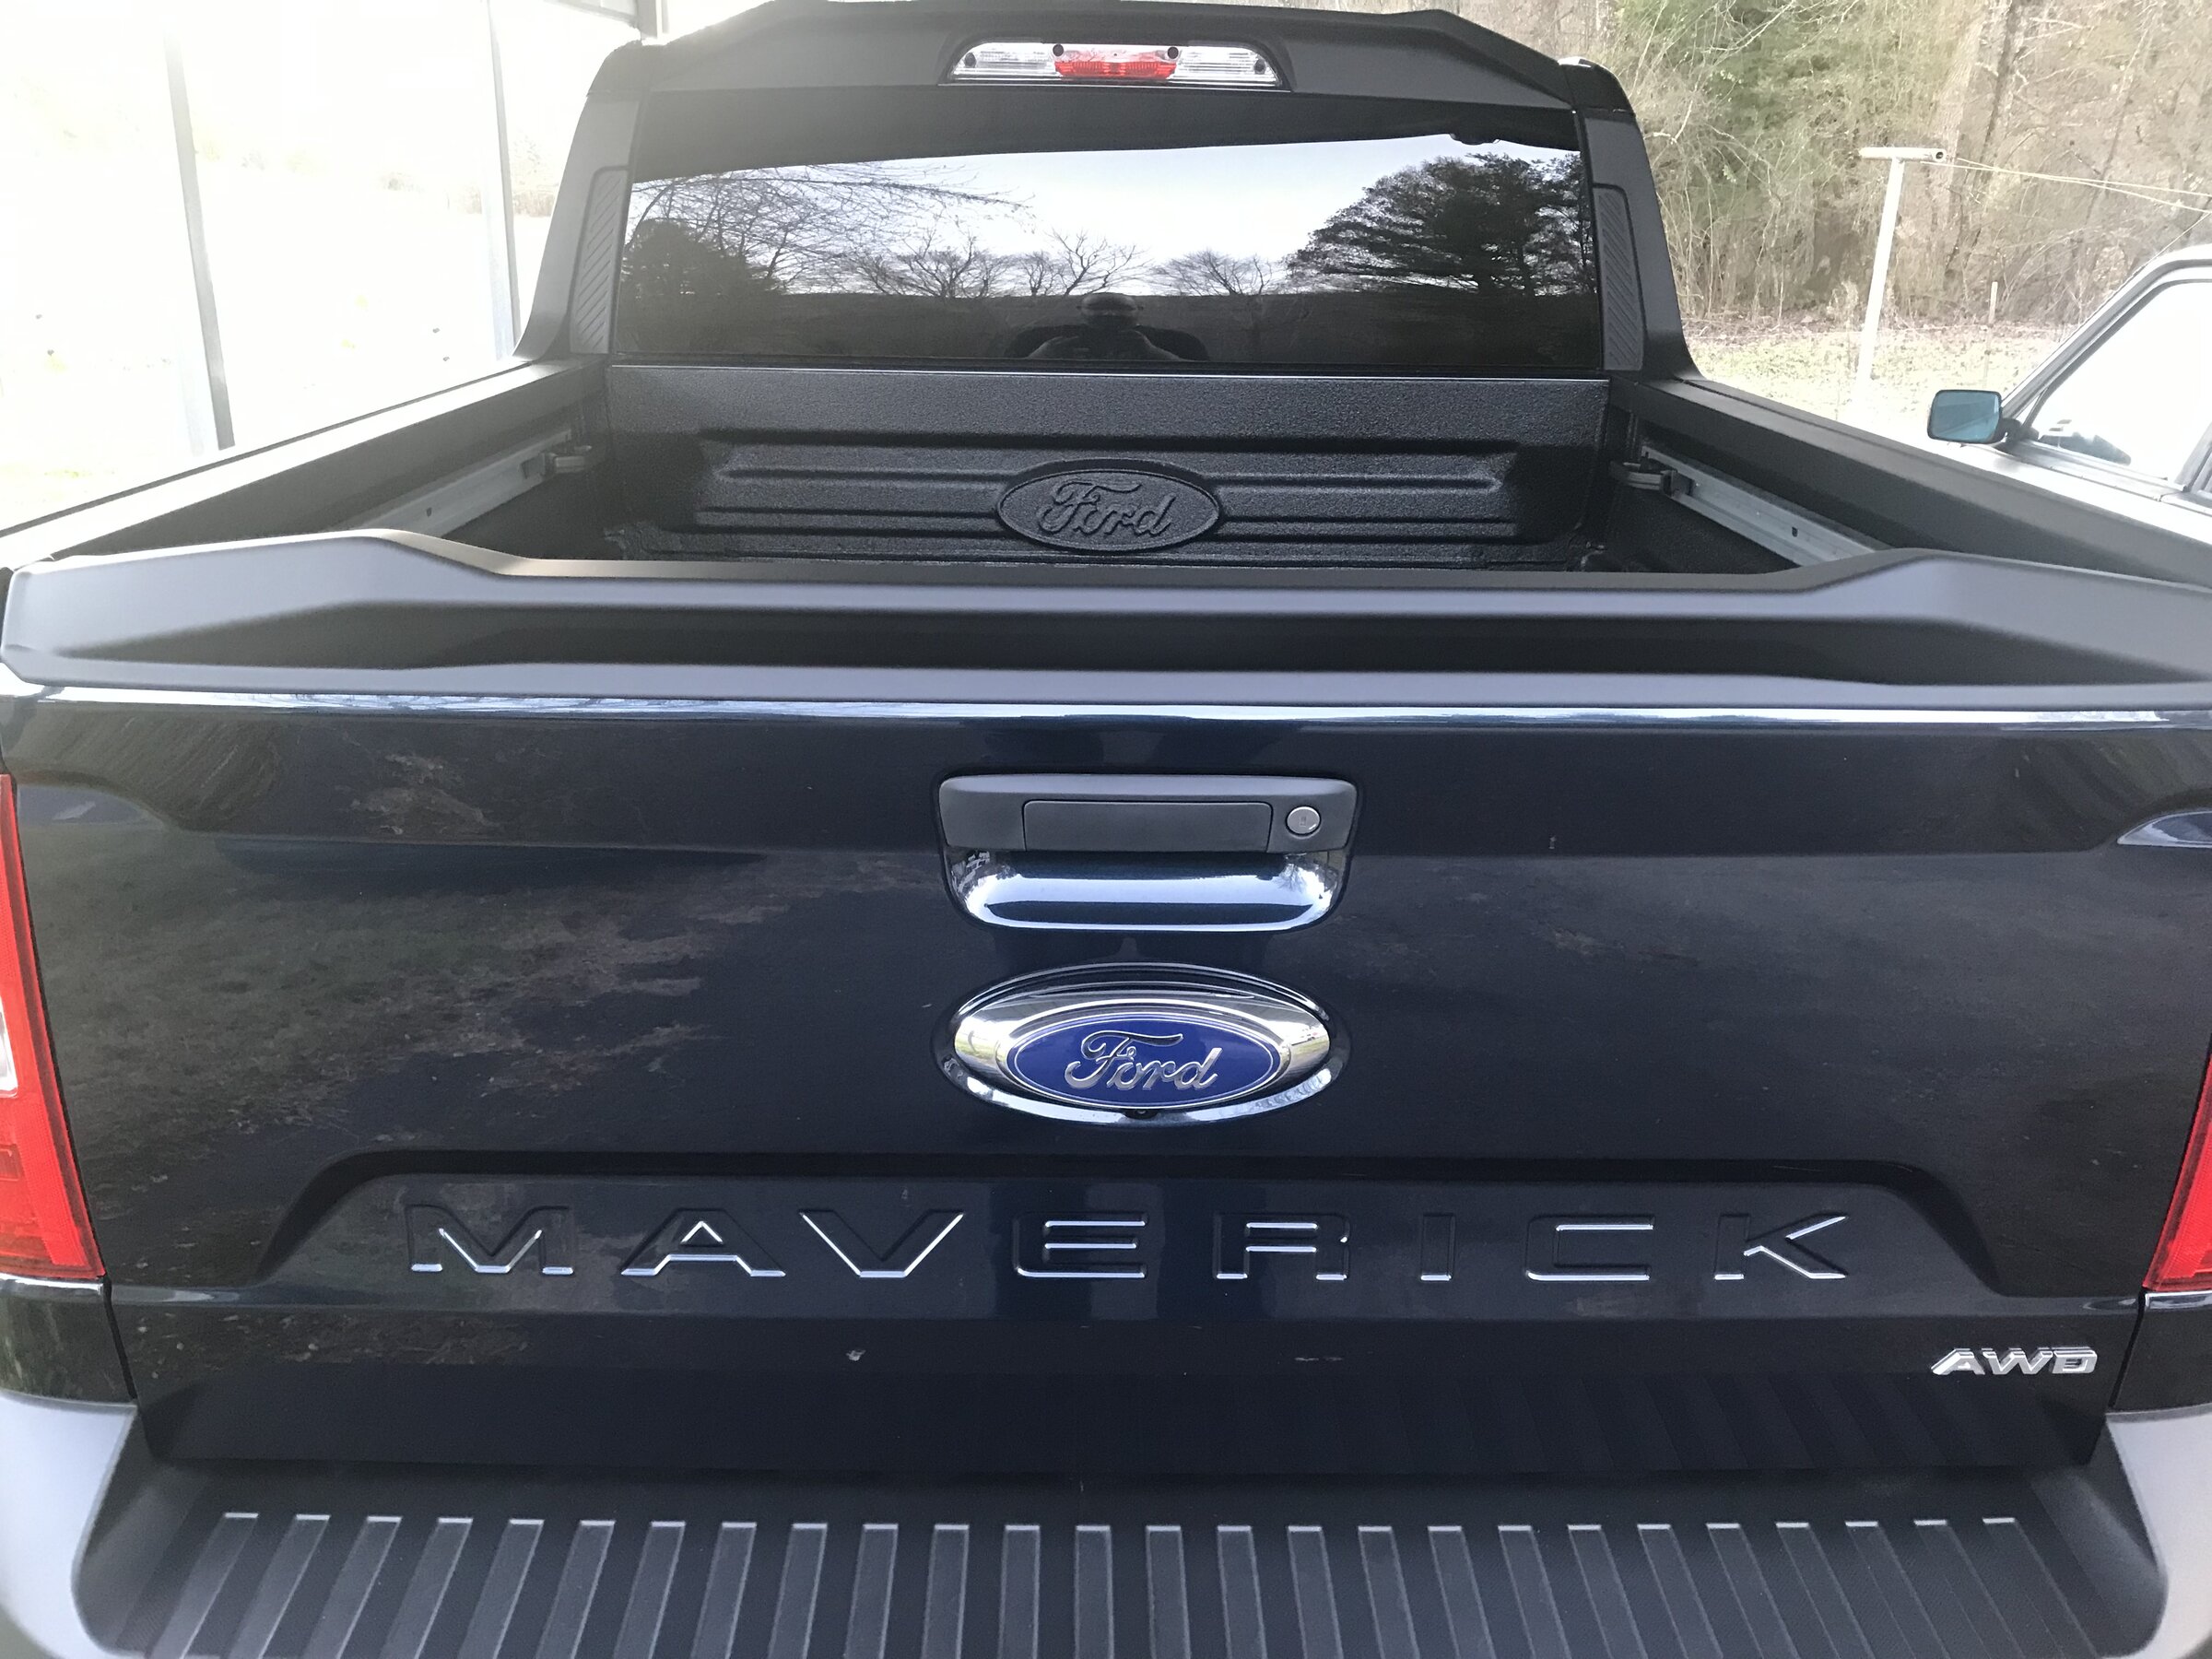 Ford Maverick Air Design rear spoiler installed IMG-2501